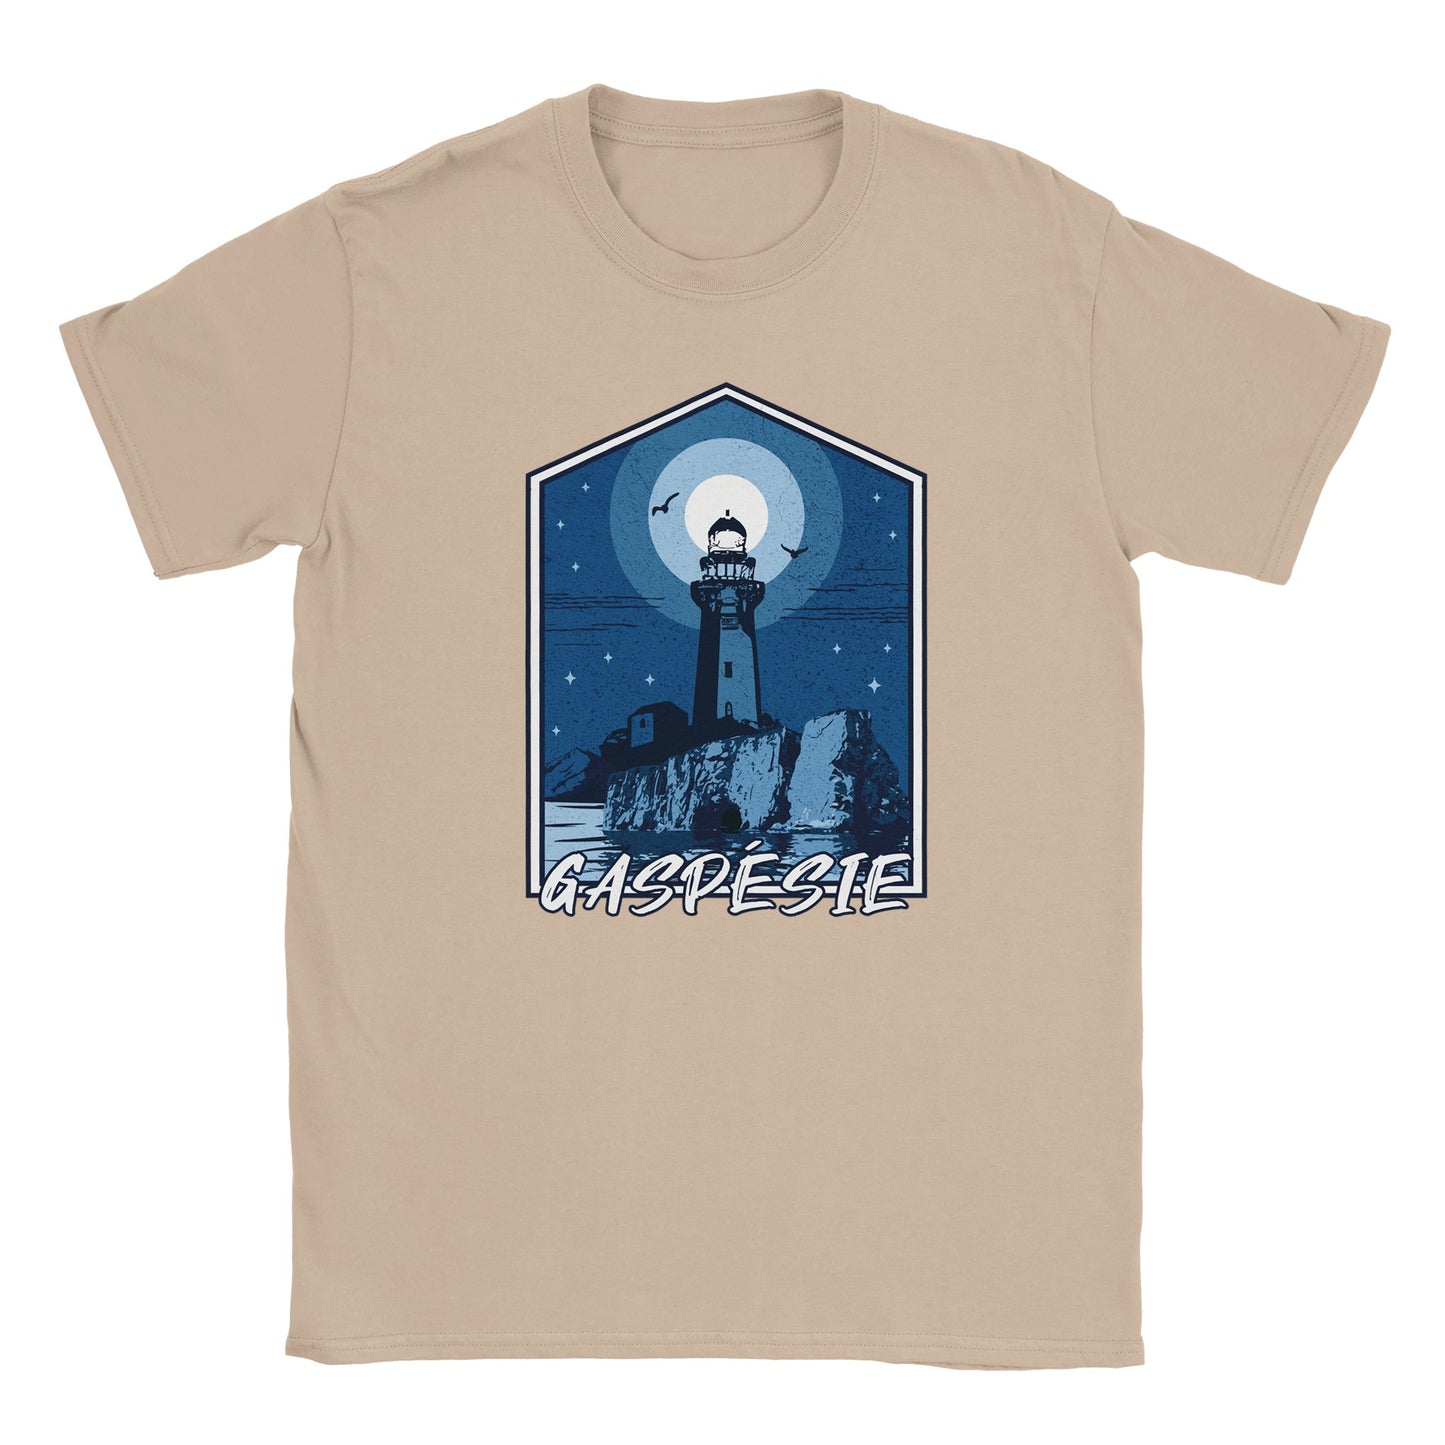 T-shirt - Gaspésie